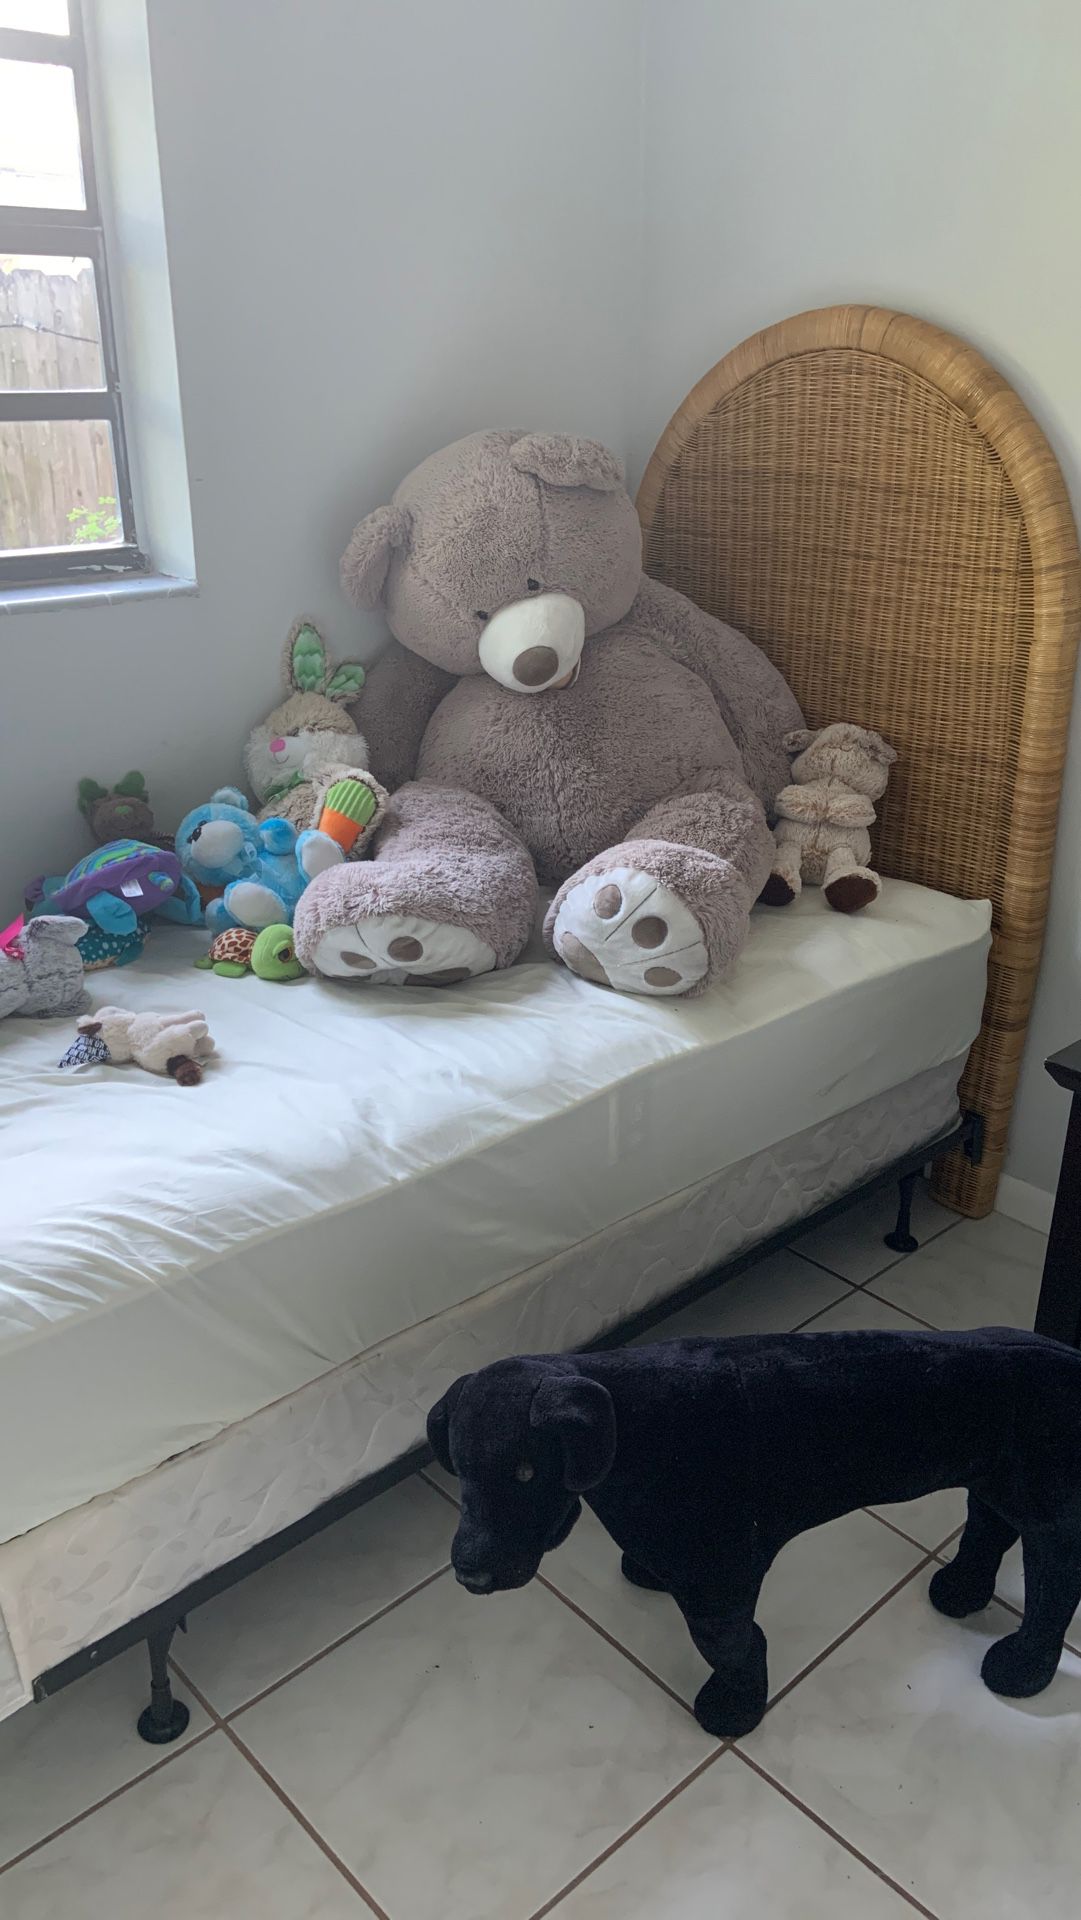 Teddy bear and assorted stuffed animals